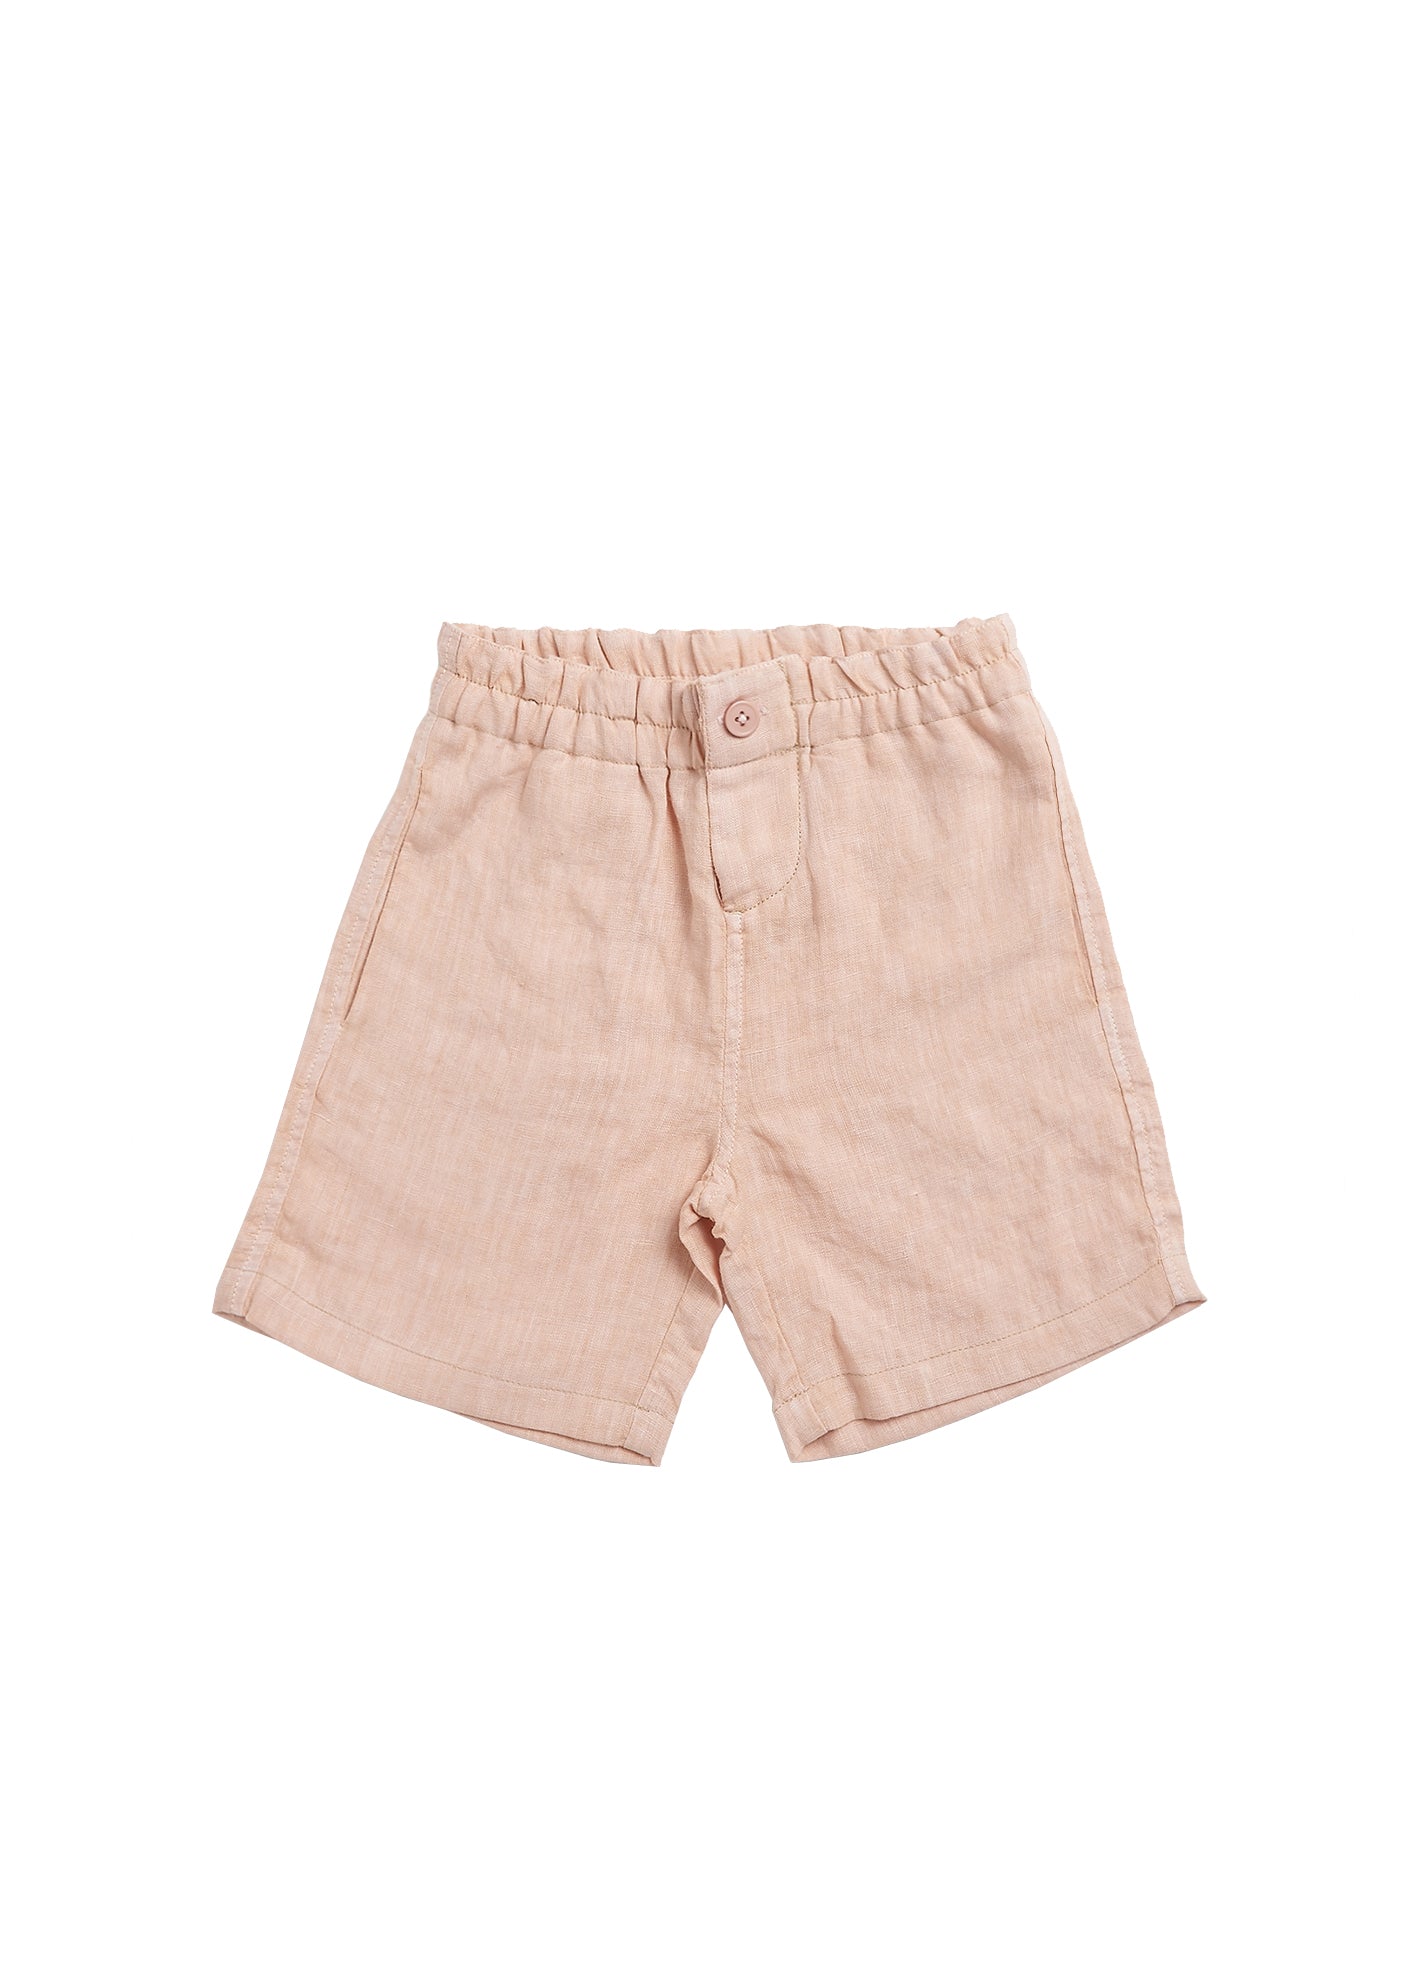 Boys & Girls Light Pink Shorts